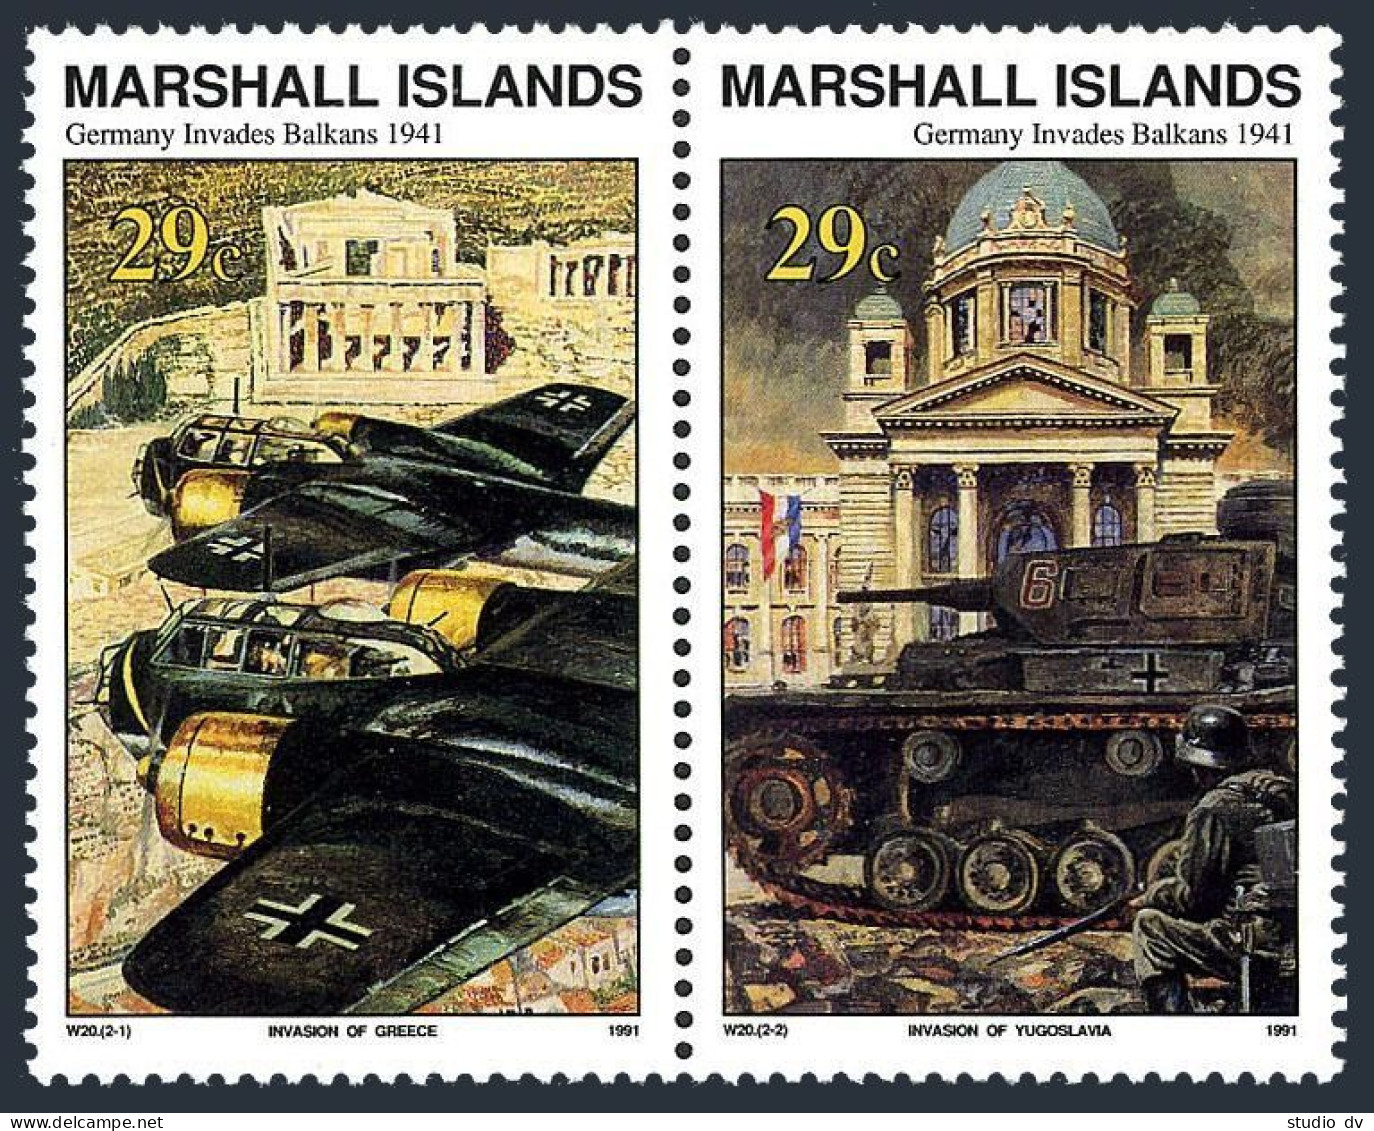 Marshall 276-277a Pair, MNH. WW II, Germans Invade The Balkans, Apr.1941, 1991. - Marshall